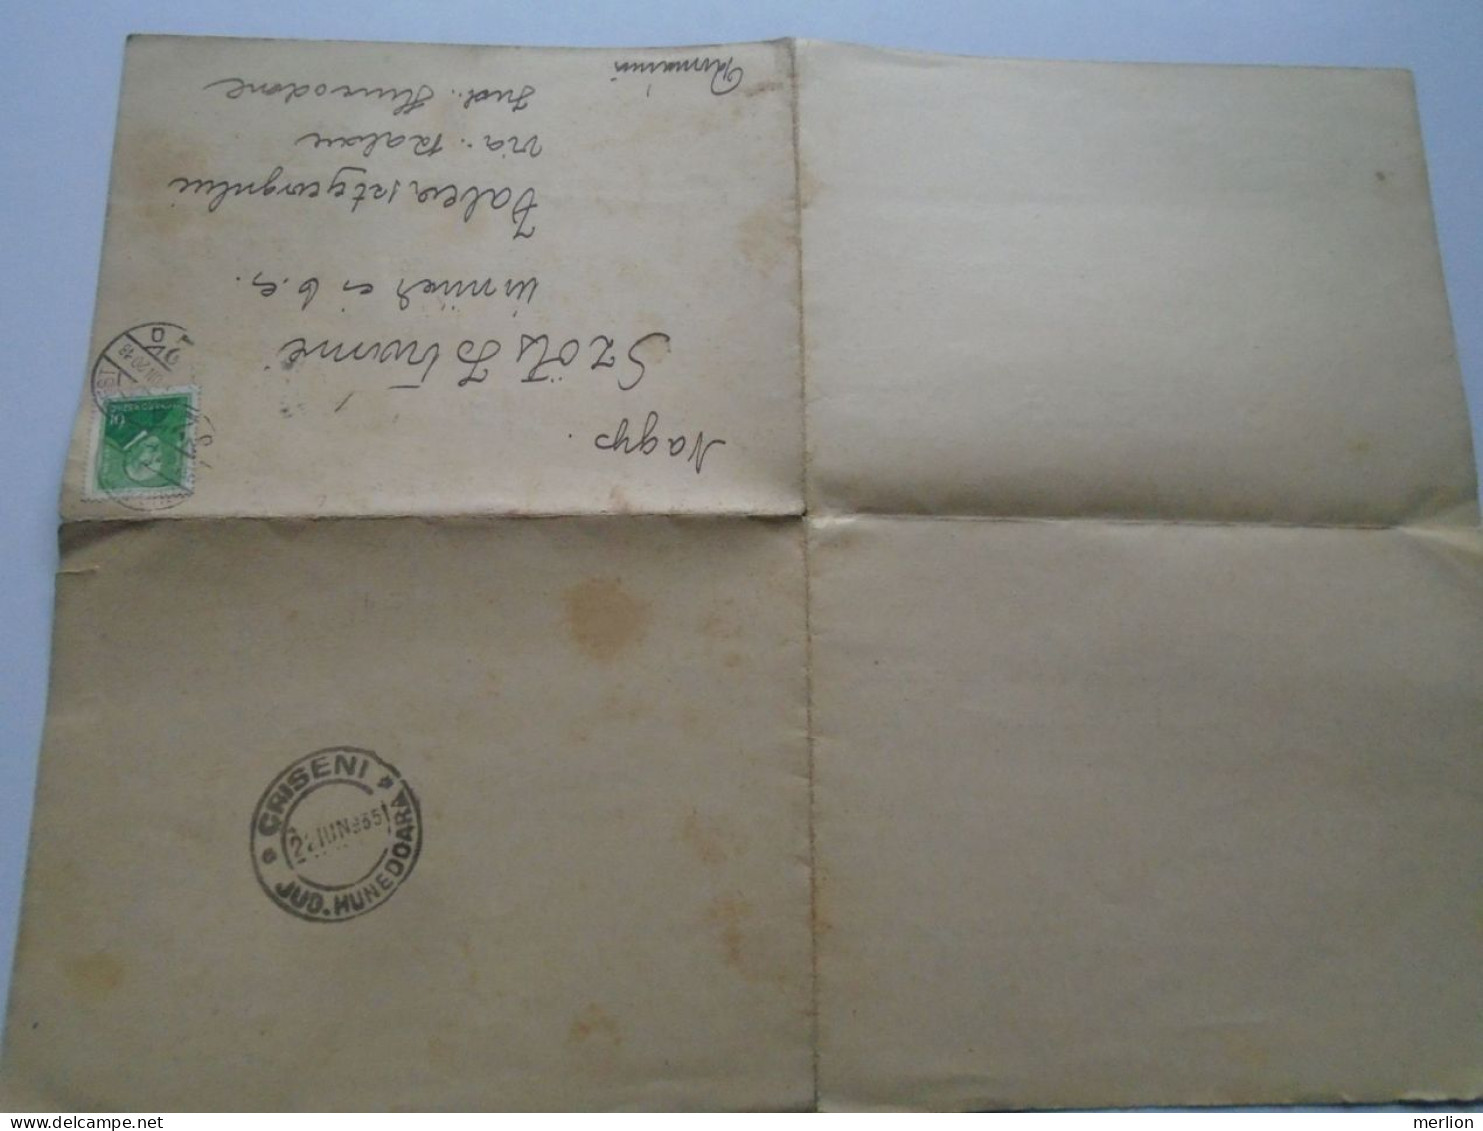 ZA486.5 Hungary 1935 Vajdahunyadi Bogdánffy K.- Obituary Sent By Post -sent To CRISENI - Hundedoara - Brieven En Documenten